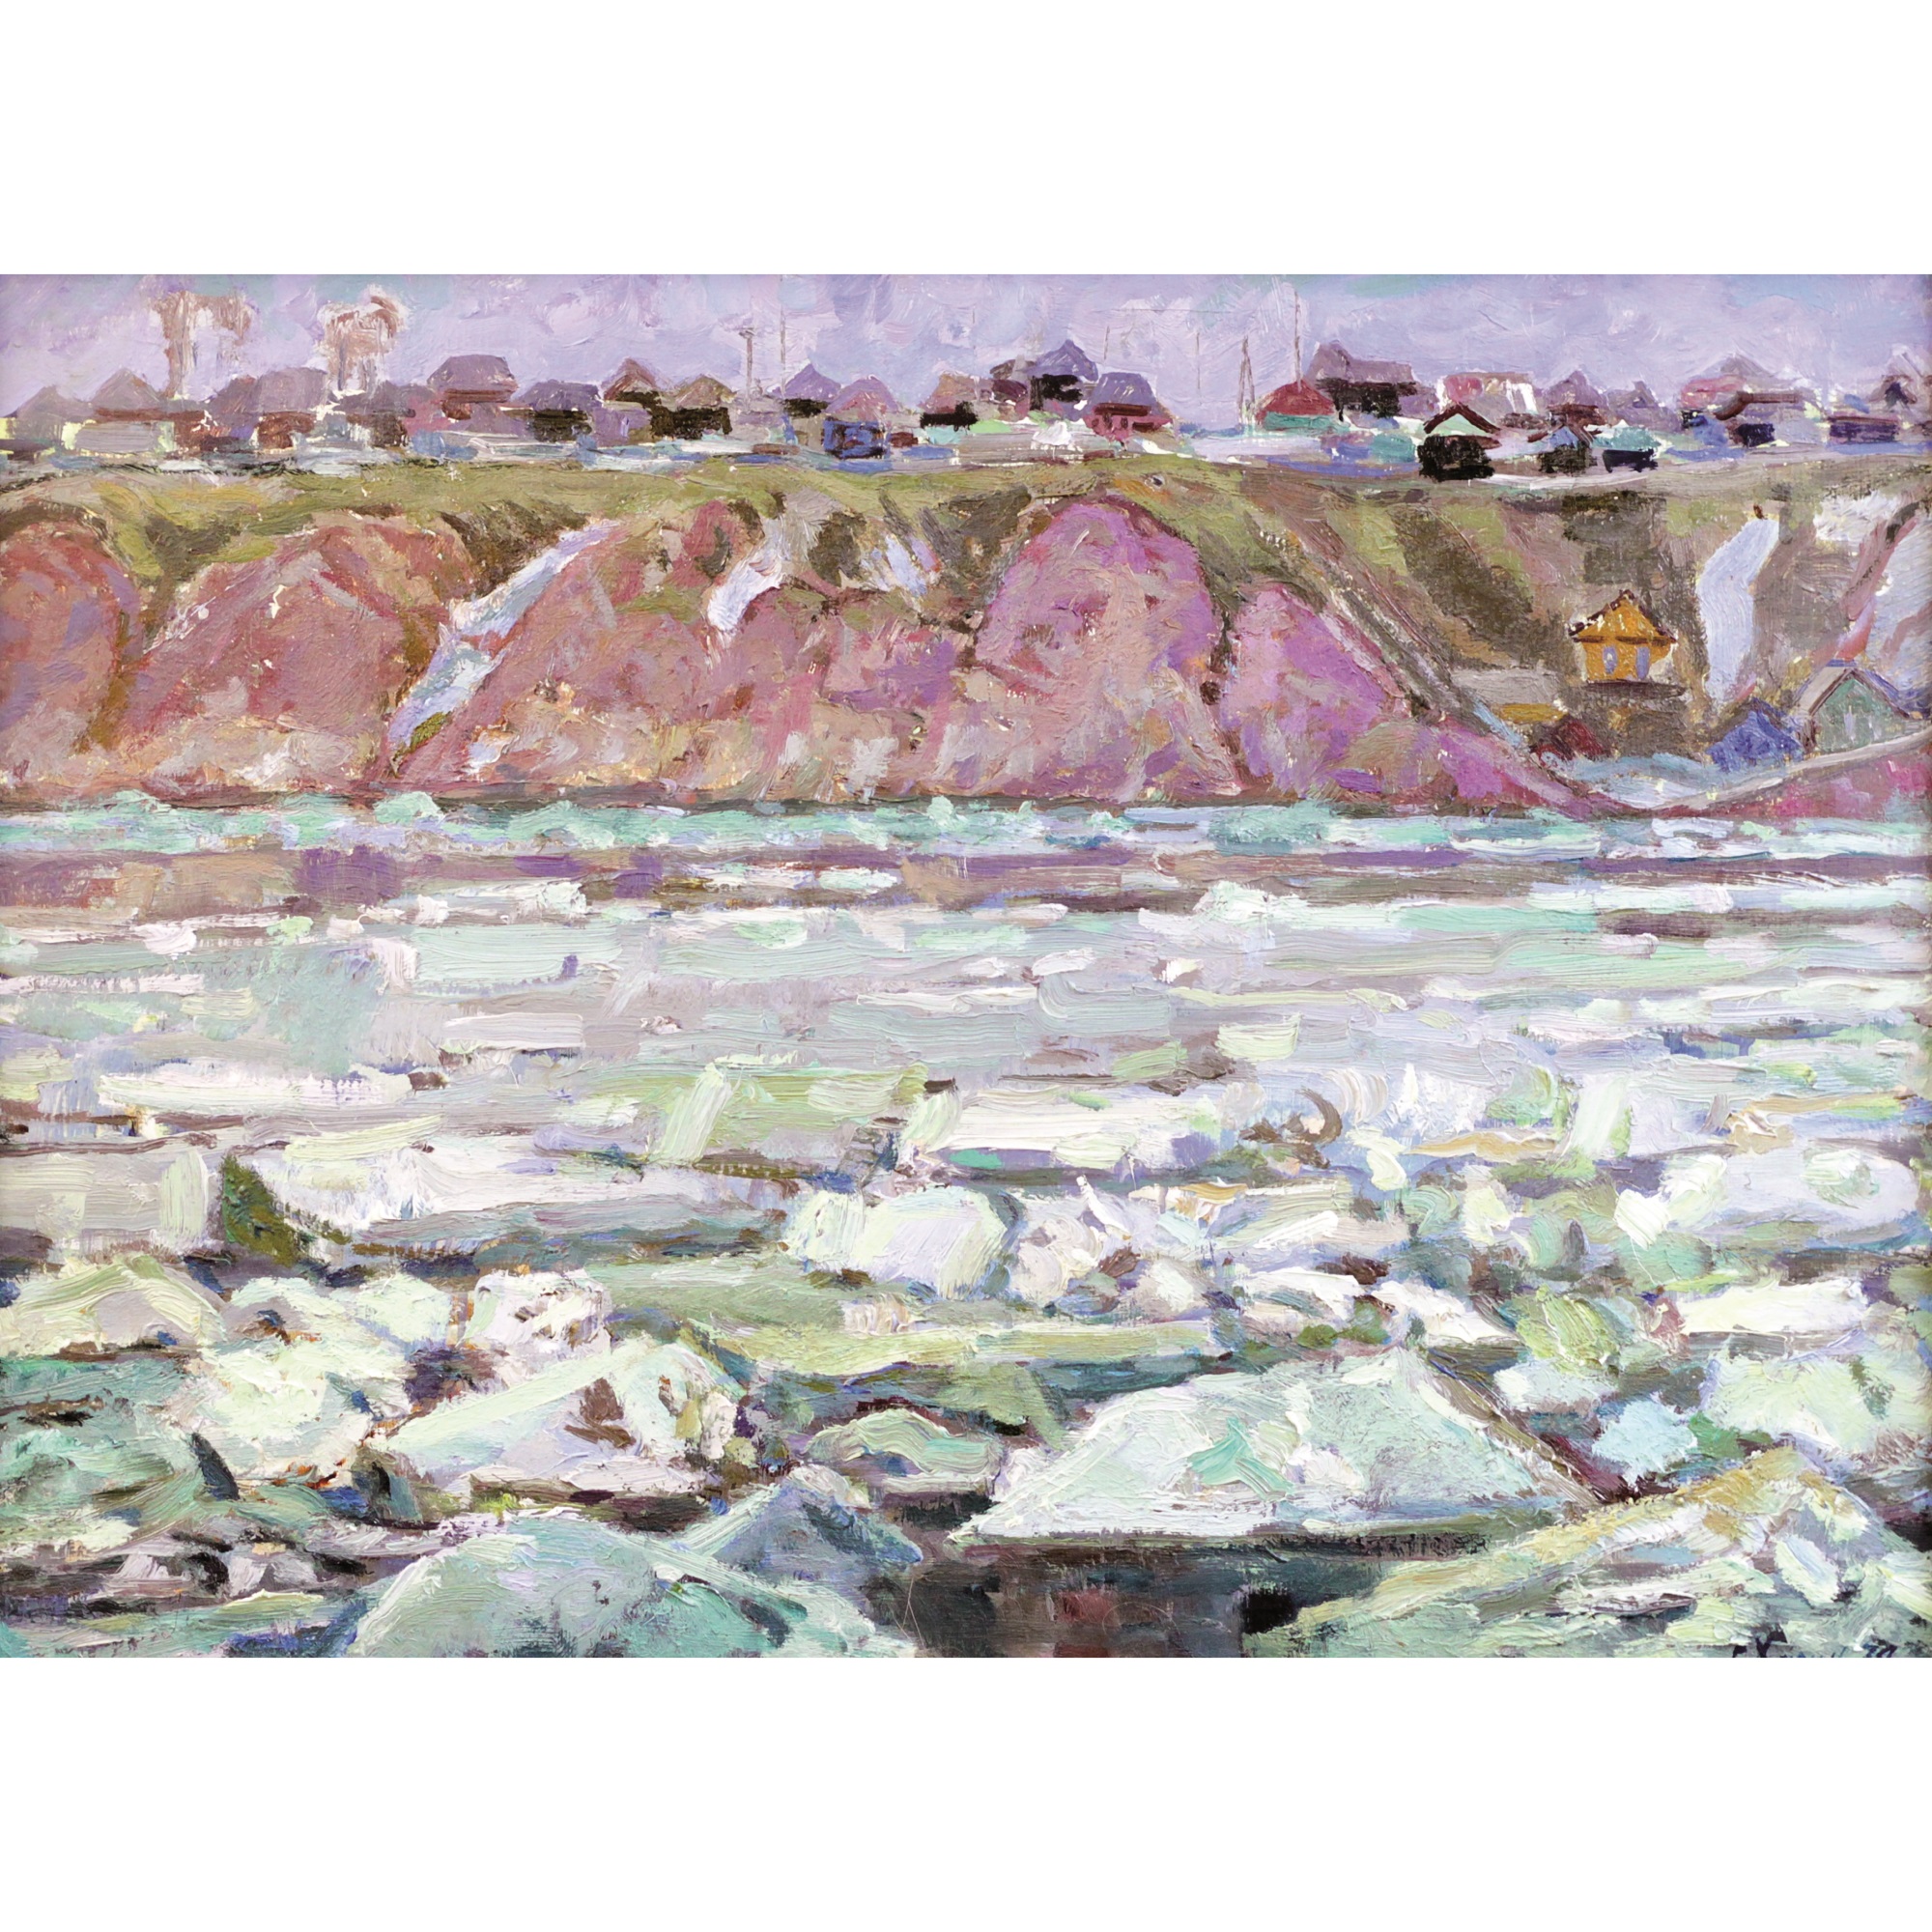 Картина ледоход на реке. Картина Тюлькина ледоход. Ги Гуркин картина ледоход. Ледоход Енисей картины.